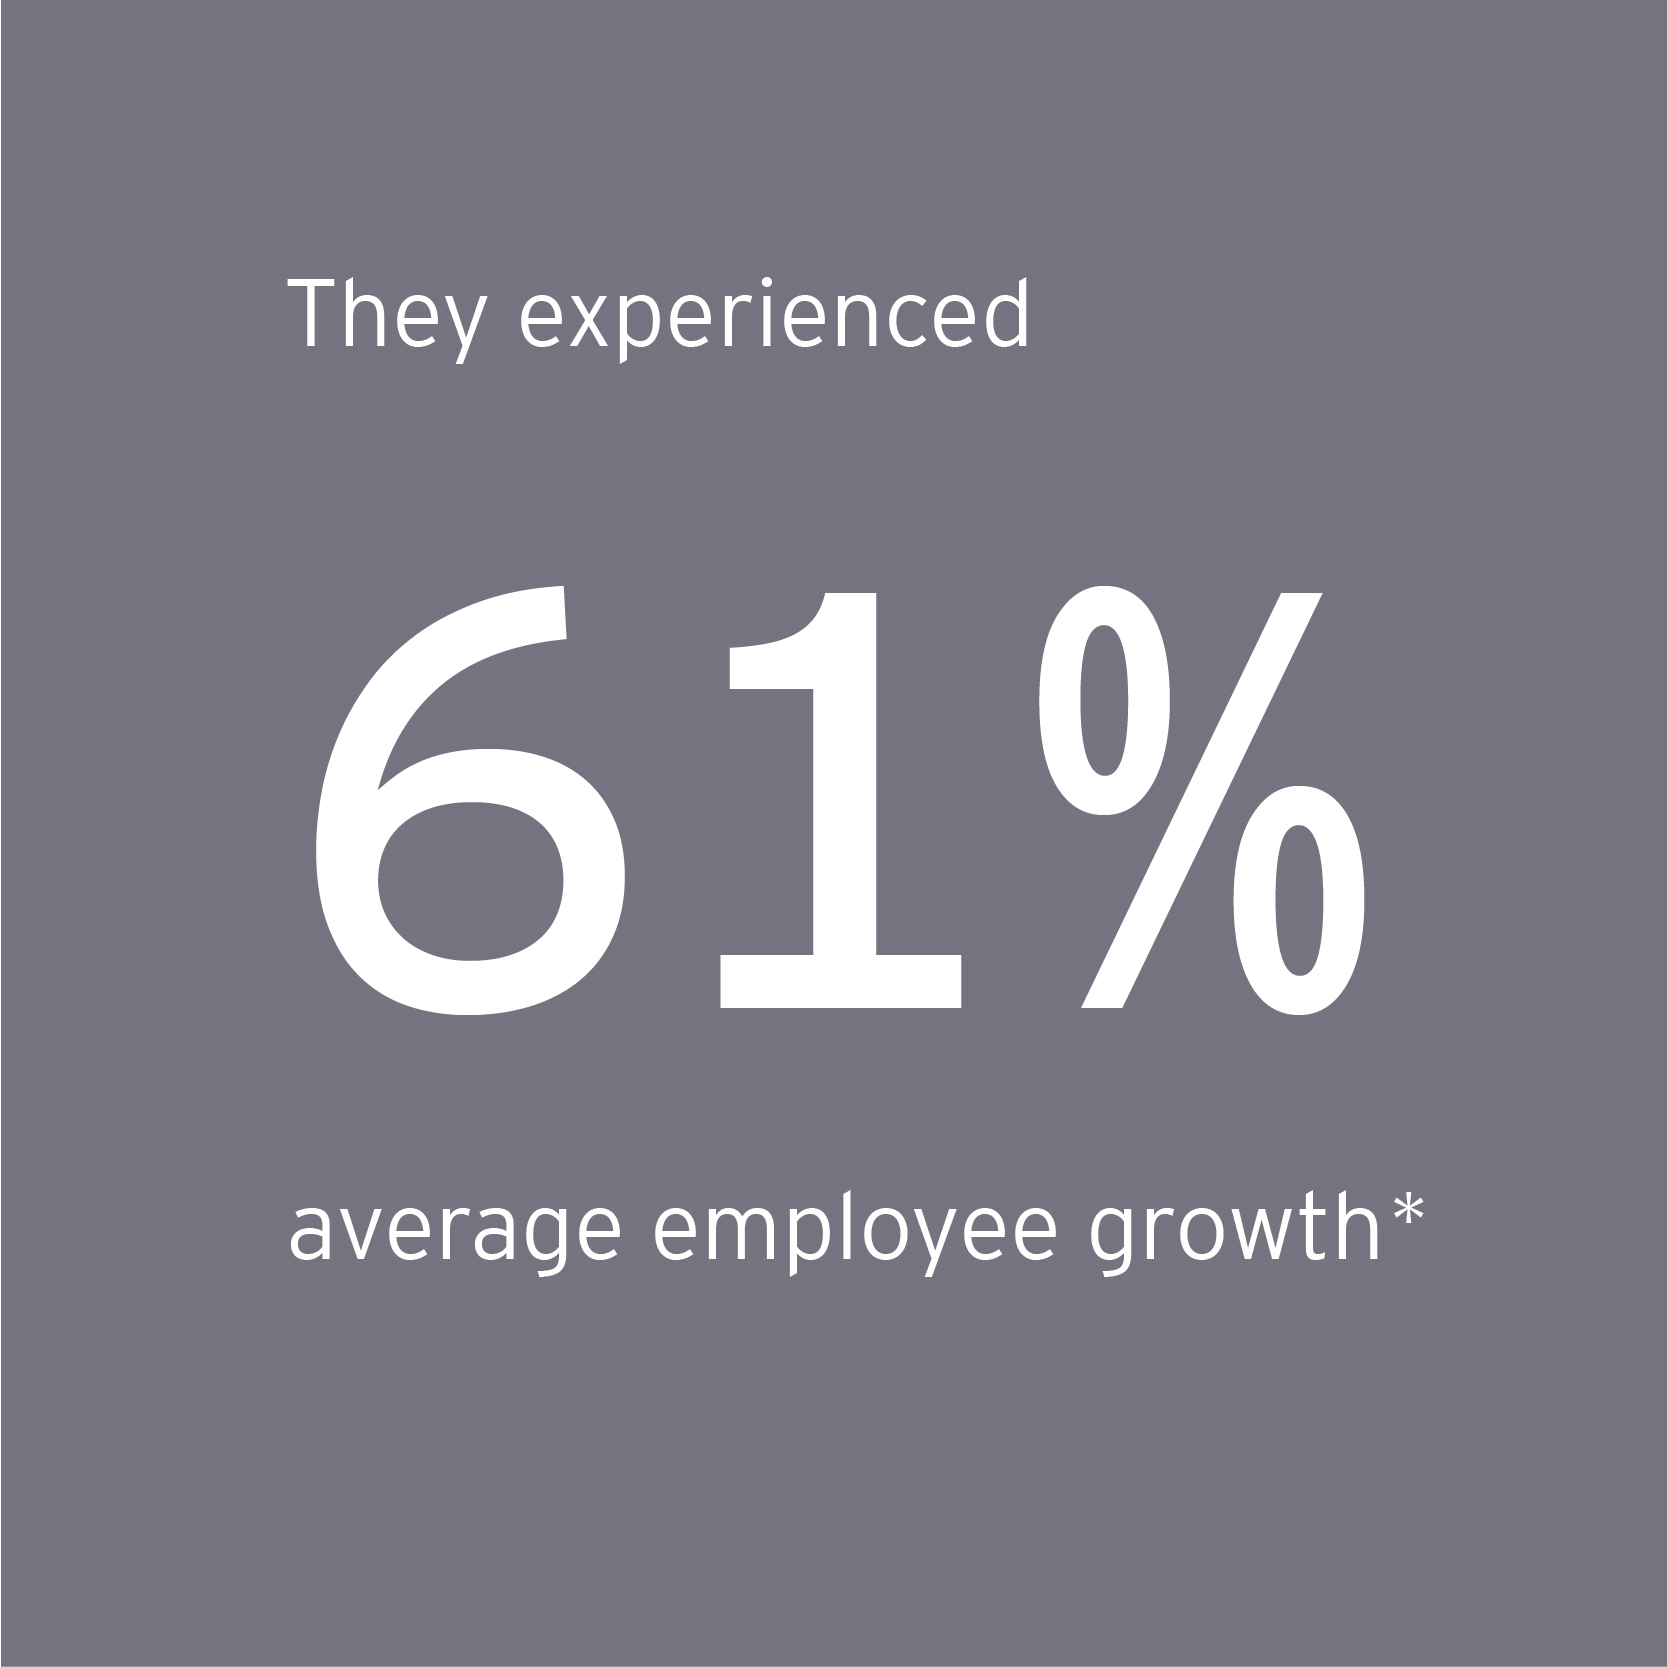 EOY winners experienced 61% average employee growth